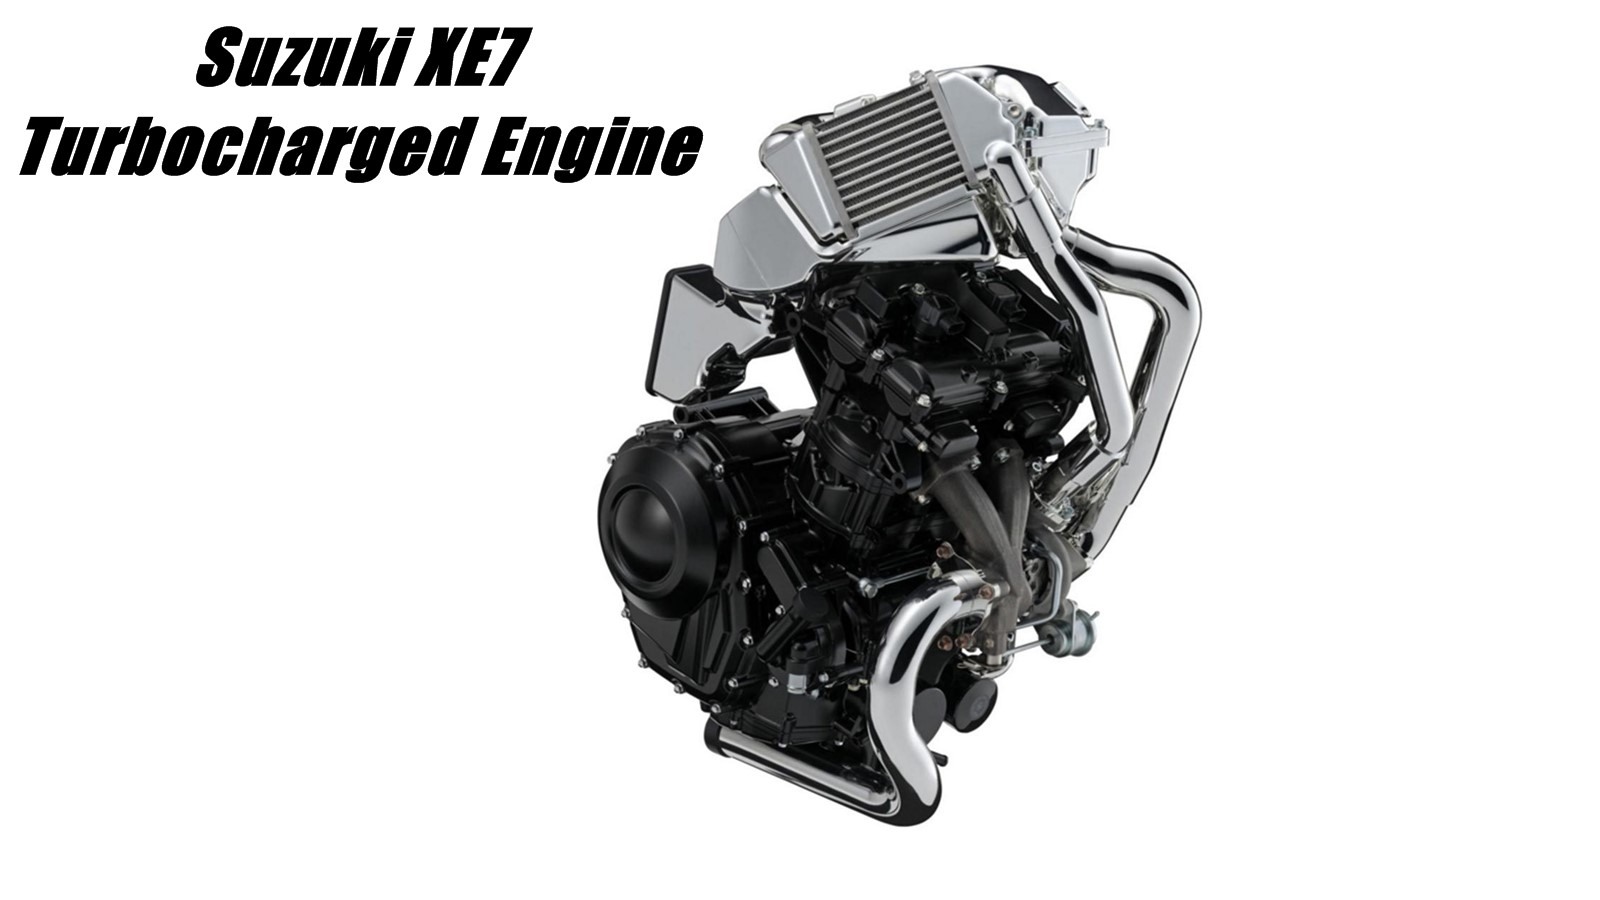 Suzuki Turbocharged Engine XE7